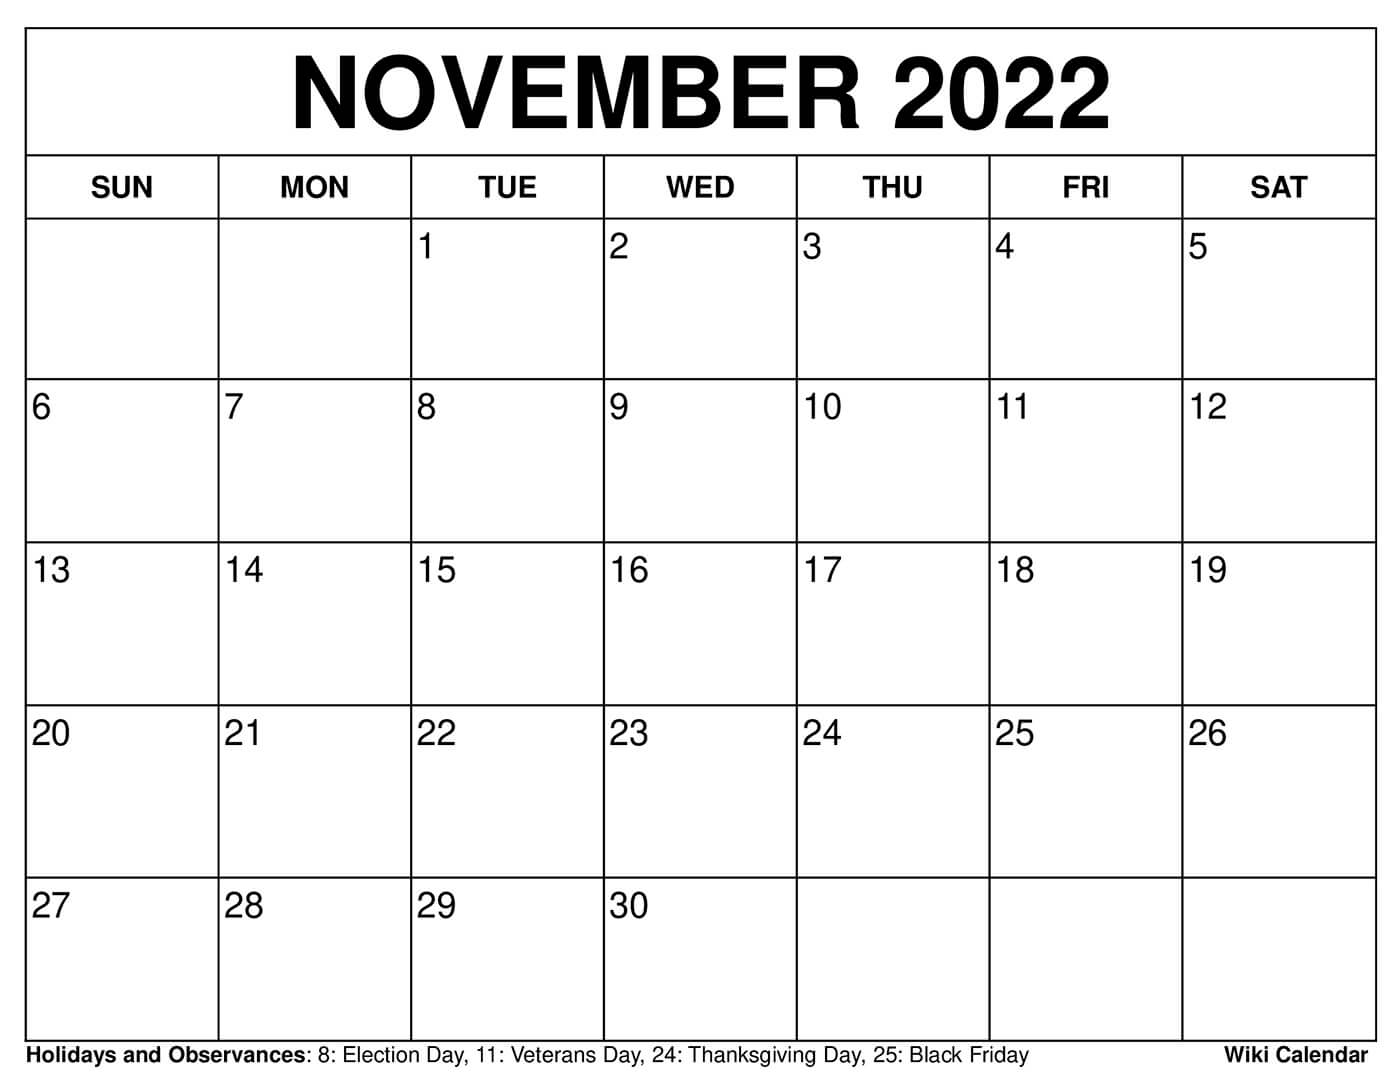 Free Printable November Calendar 2022 Free Printable November 2022 Calendars - Wiki Calendar